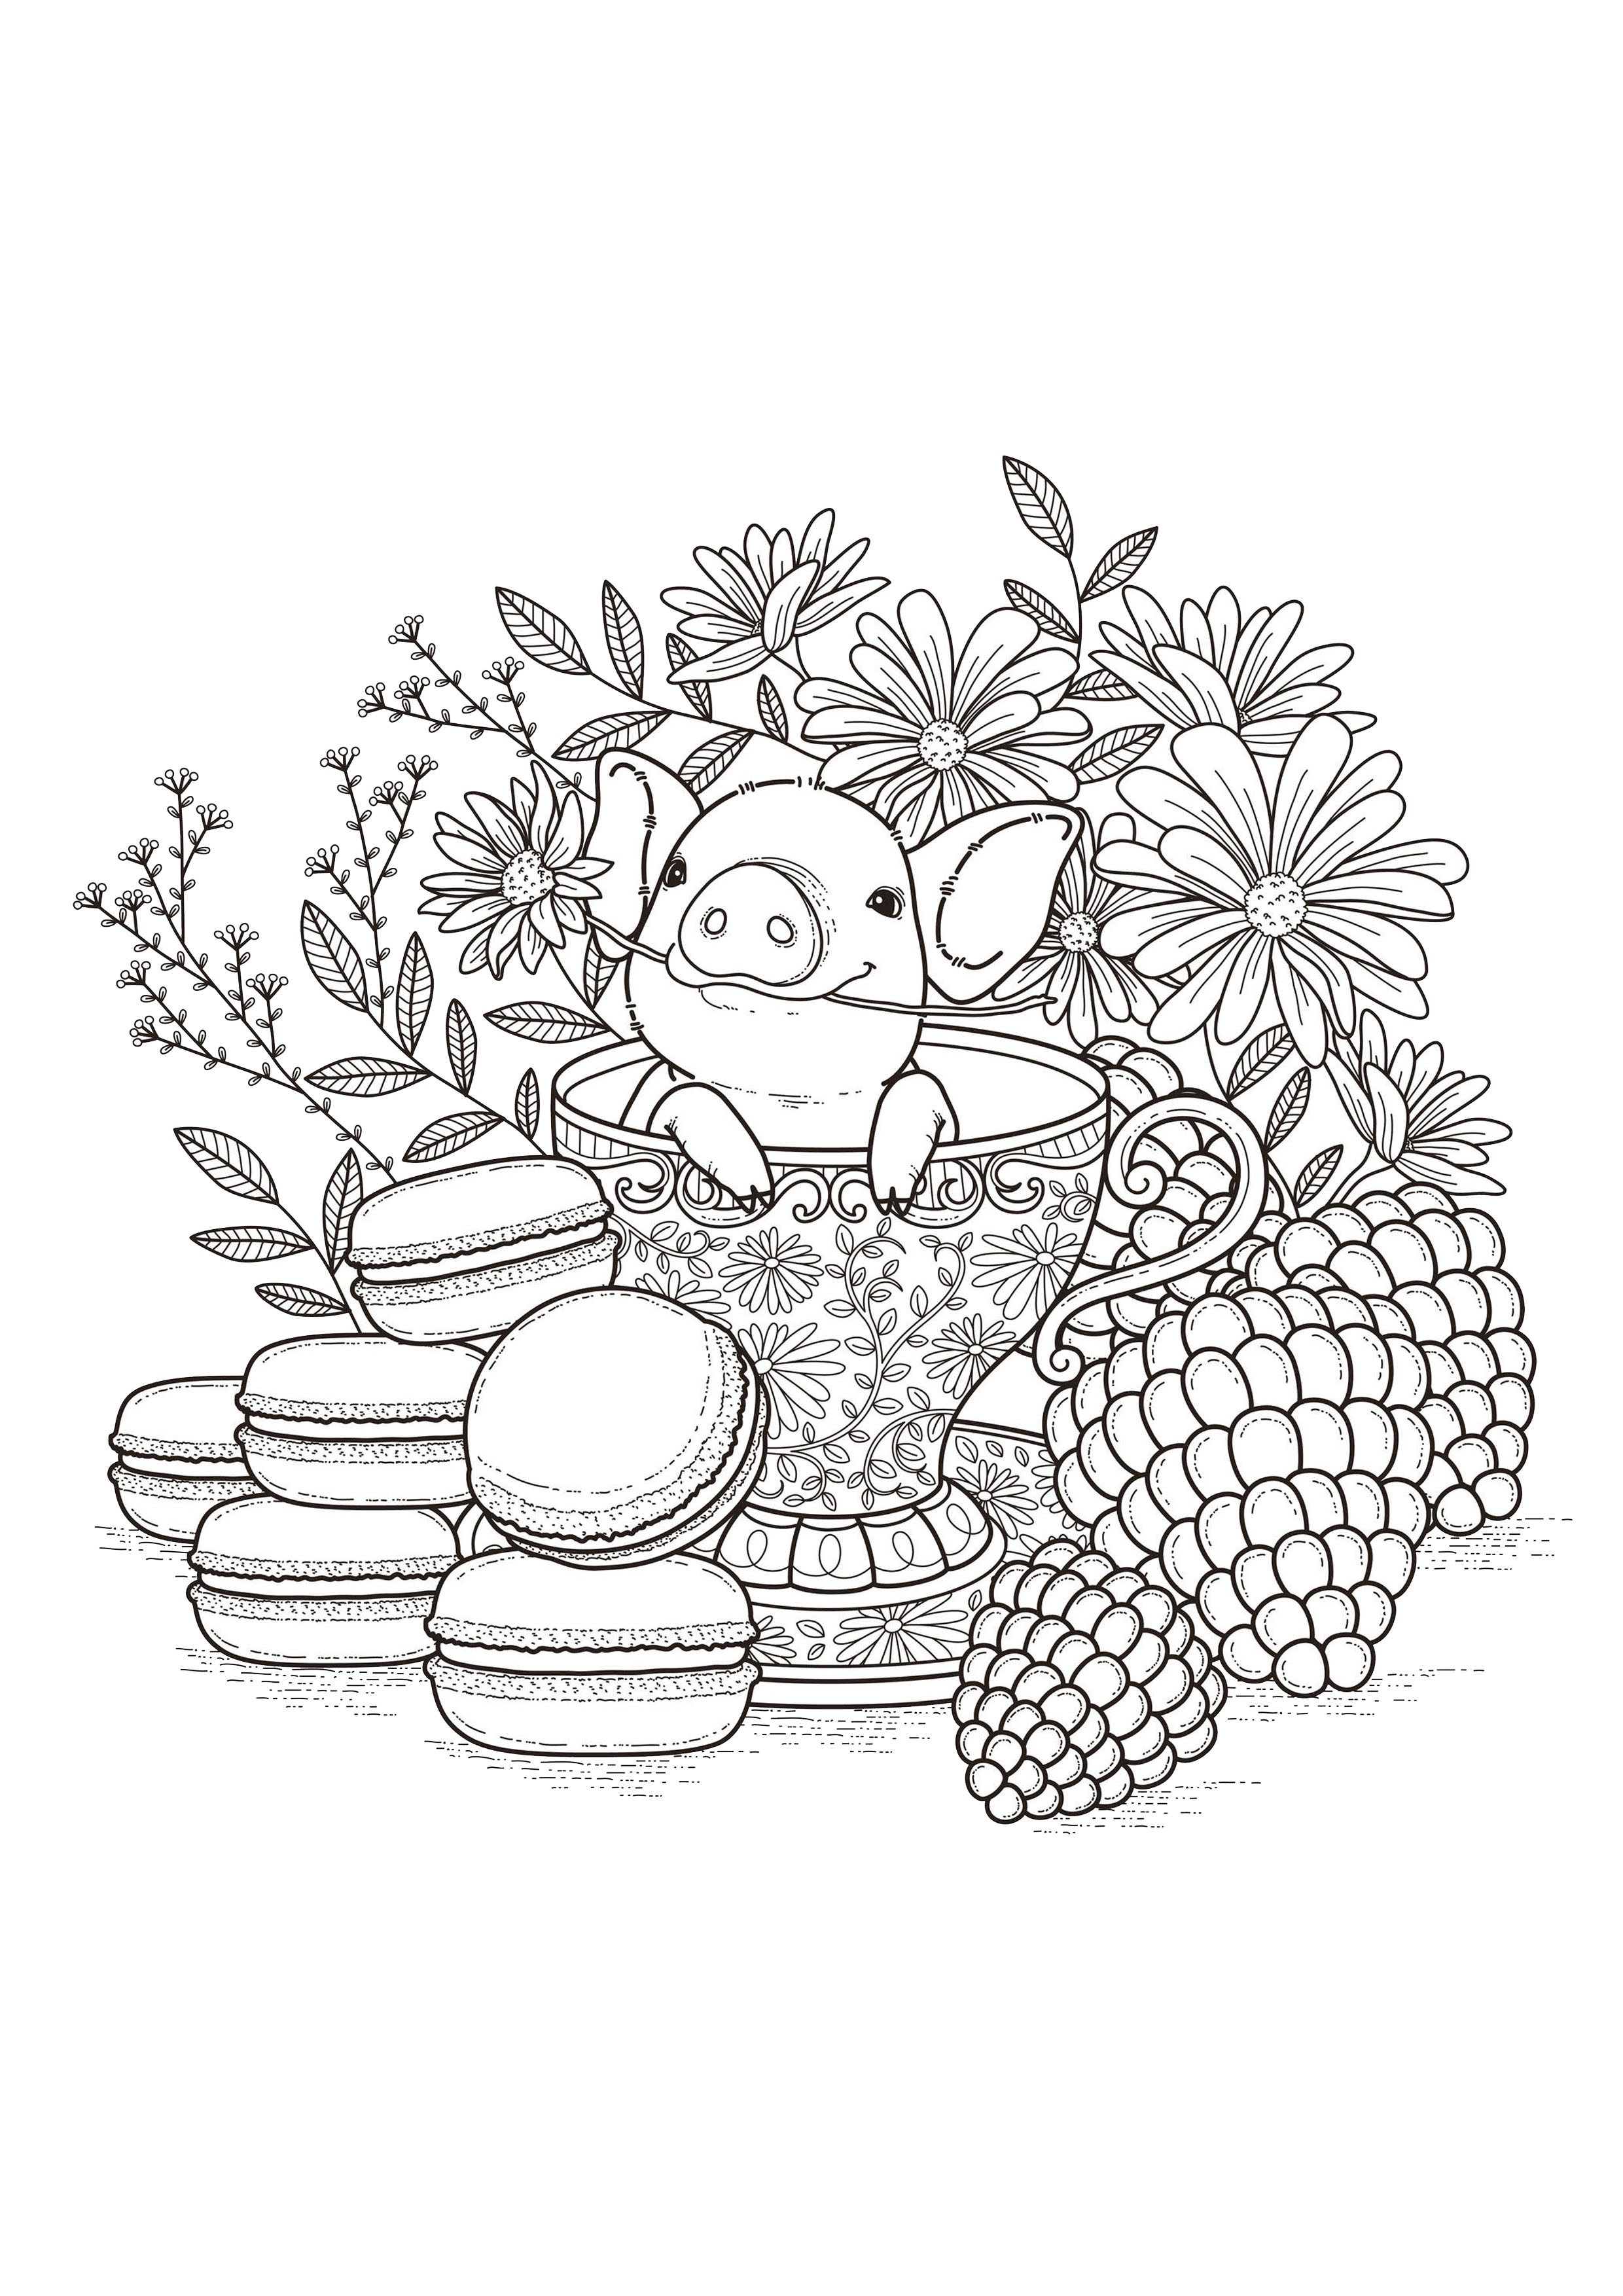 More macaroons or fruits ?, Artist : Kchung